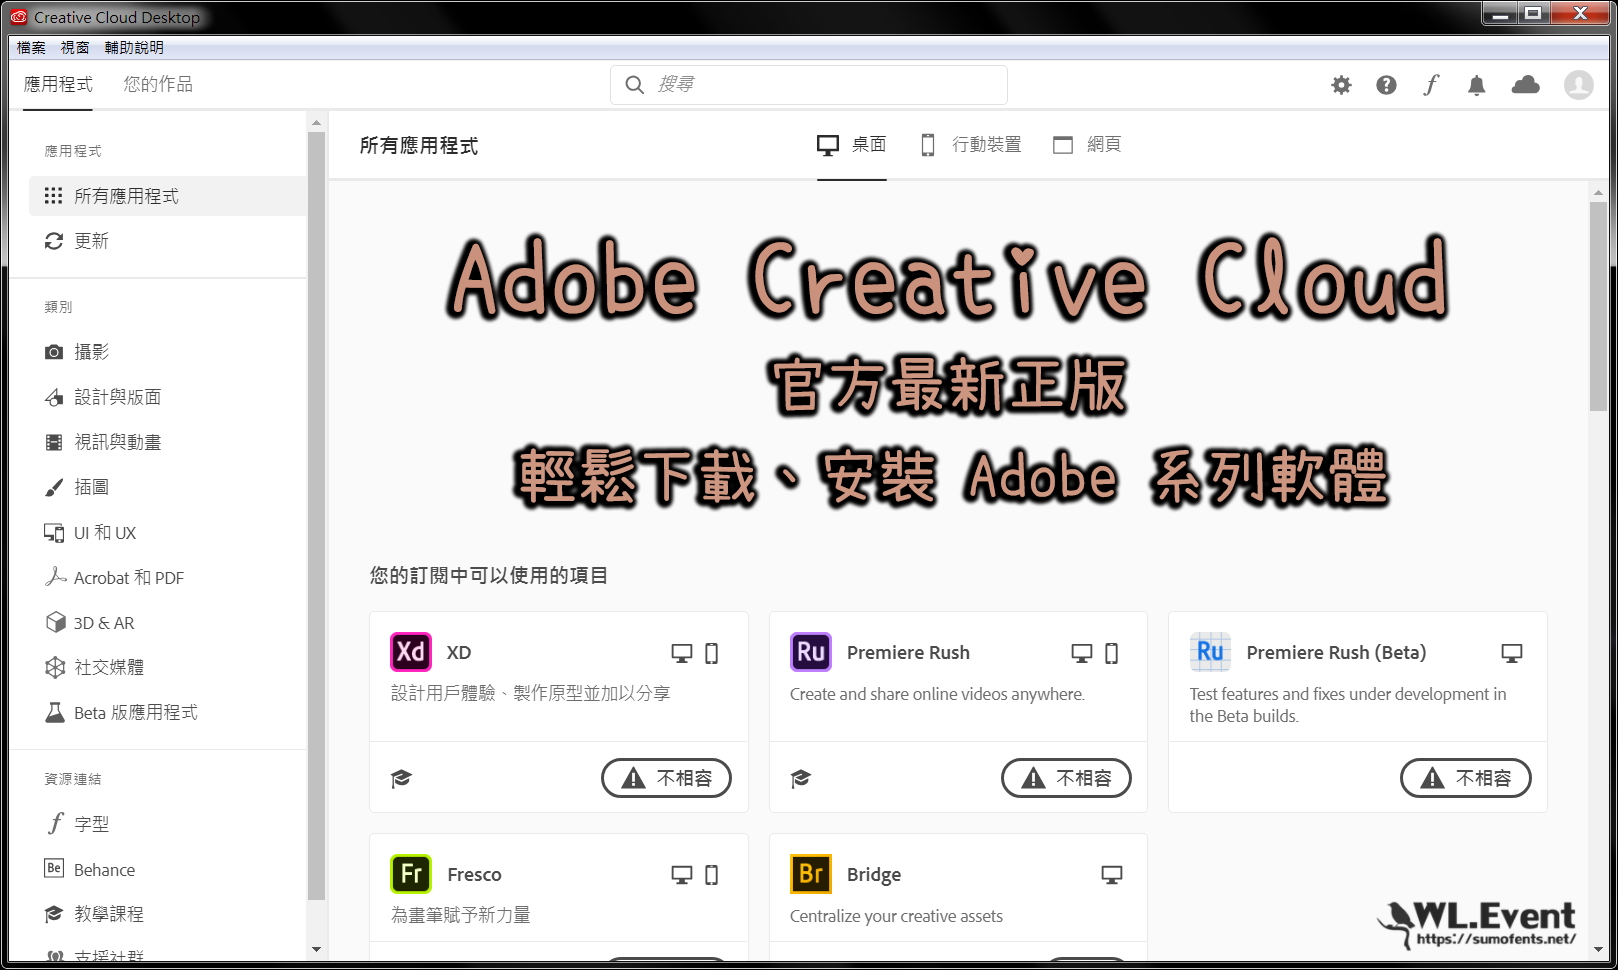 Adobe Creative Cloud 軟體封面圖